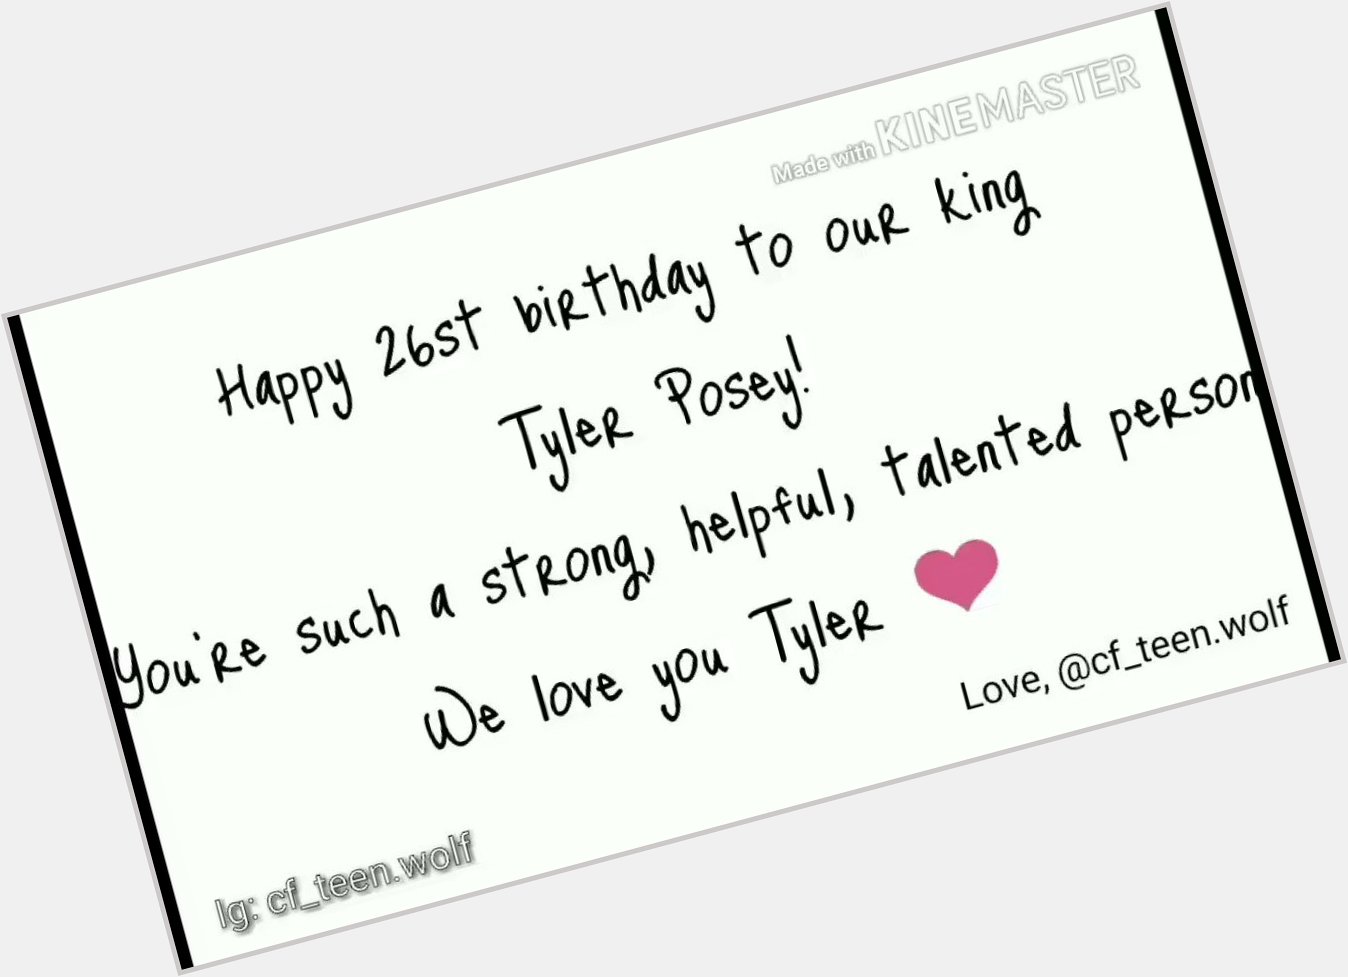 Happy Birthday to our king Tyler Posey!   Podéis mencionarlo porfa   